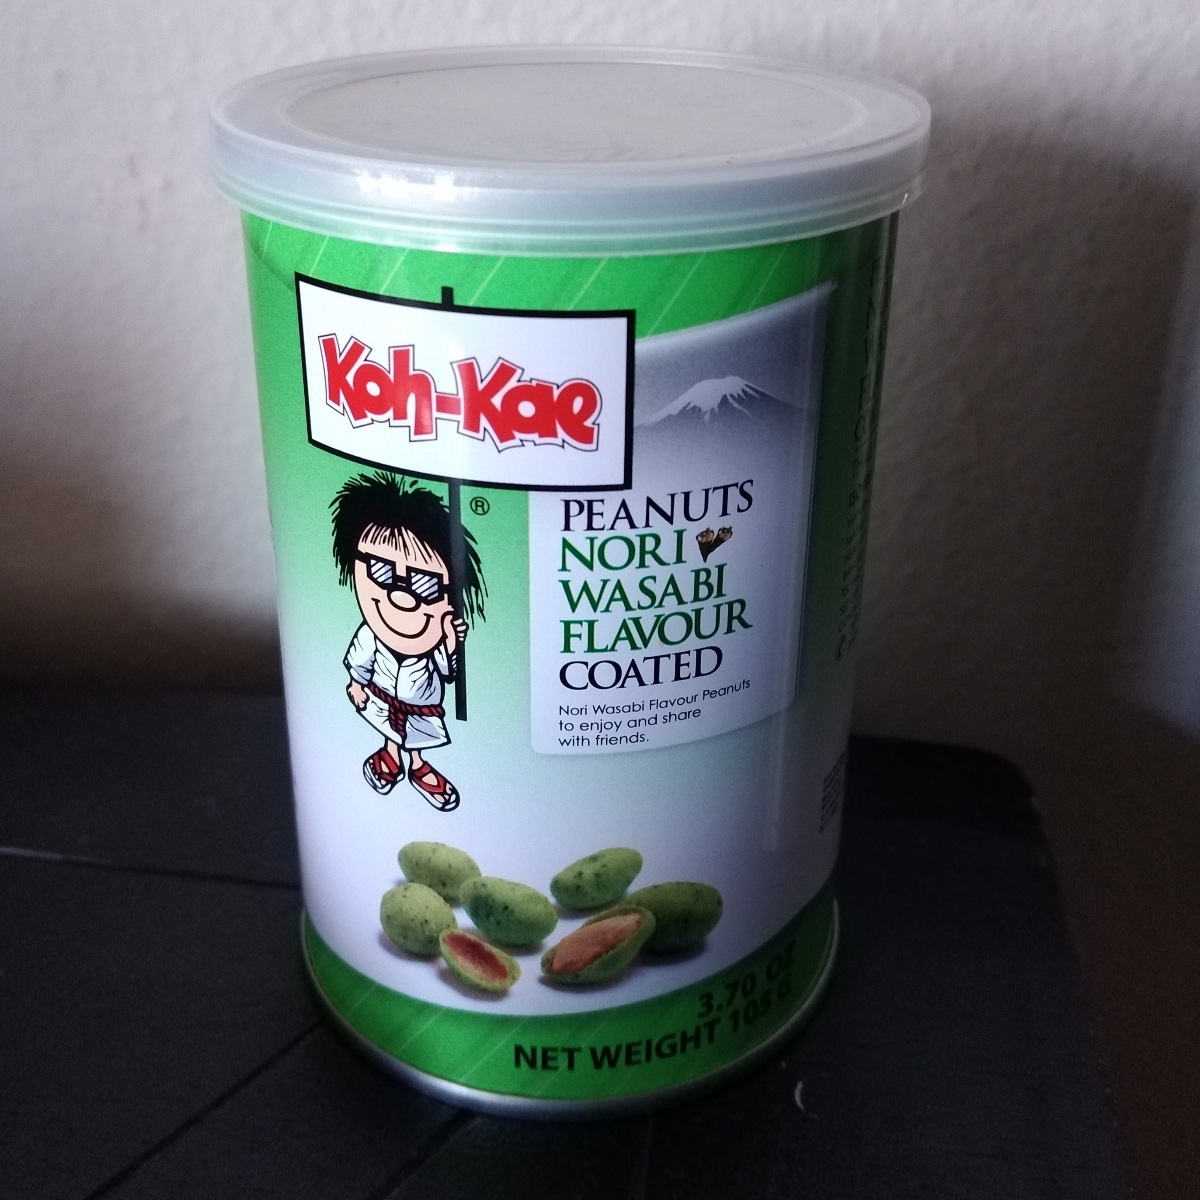 Koh-Kae Peanuts nori wasabi Review | abillion